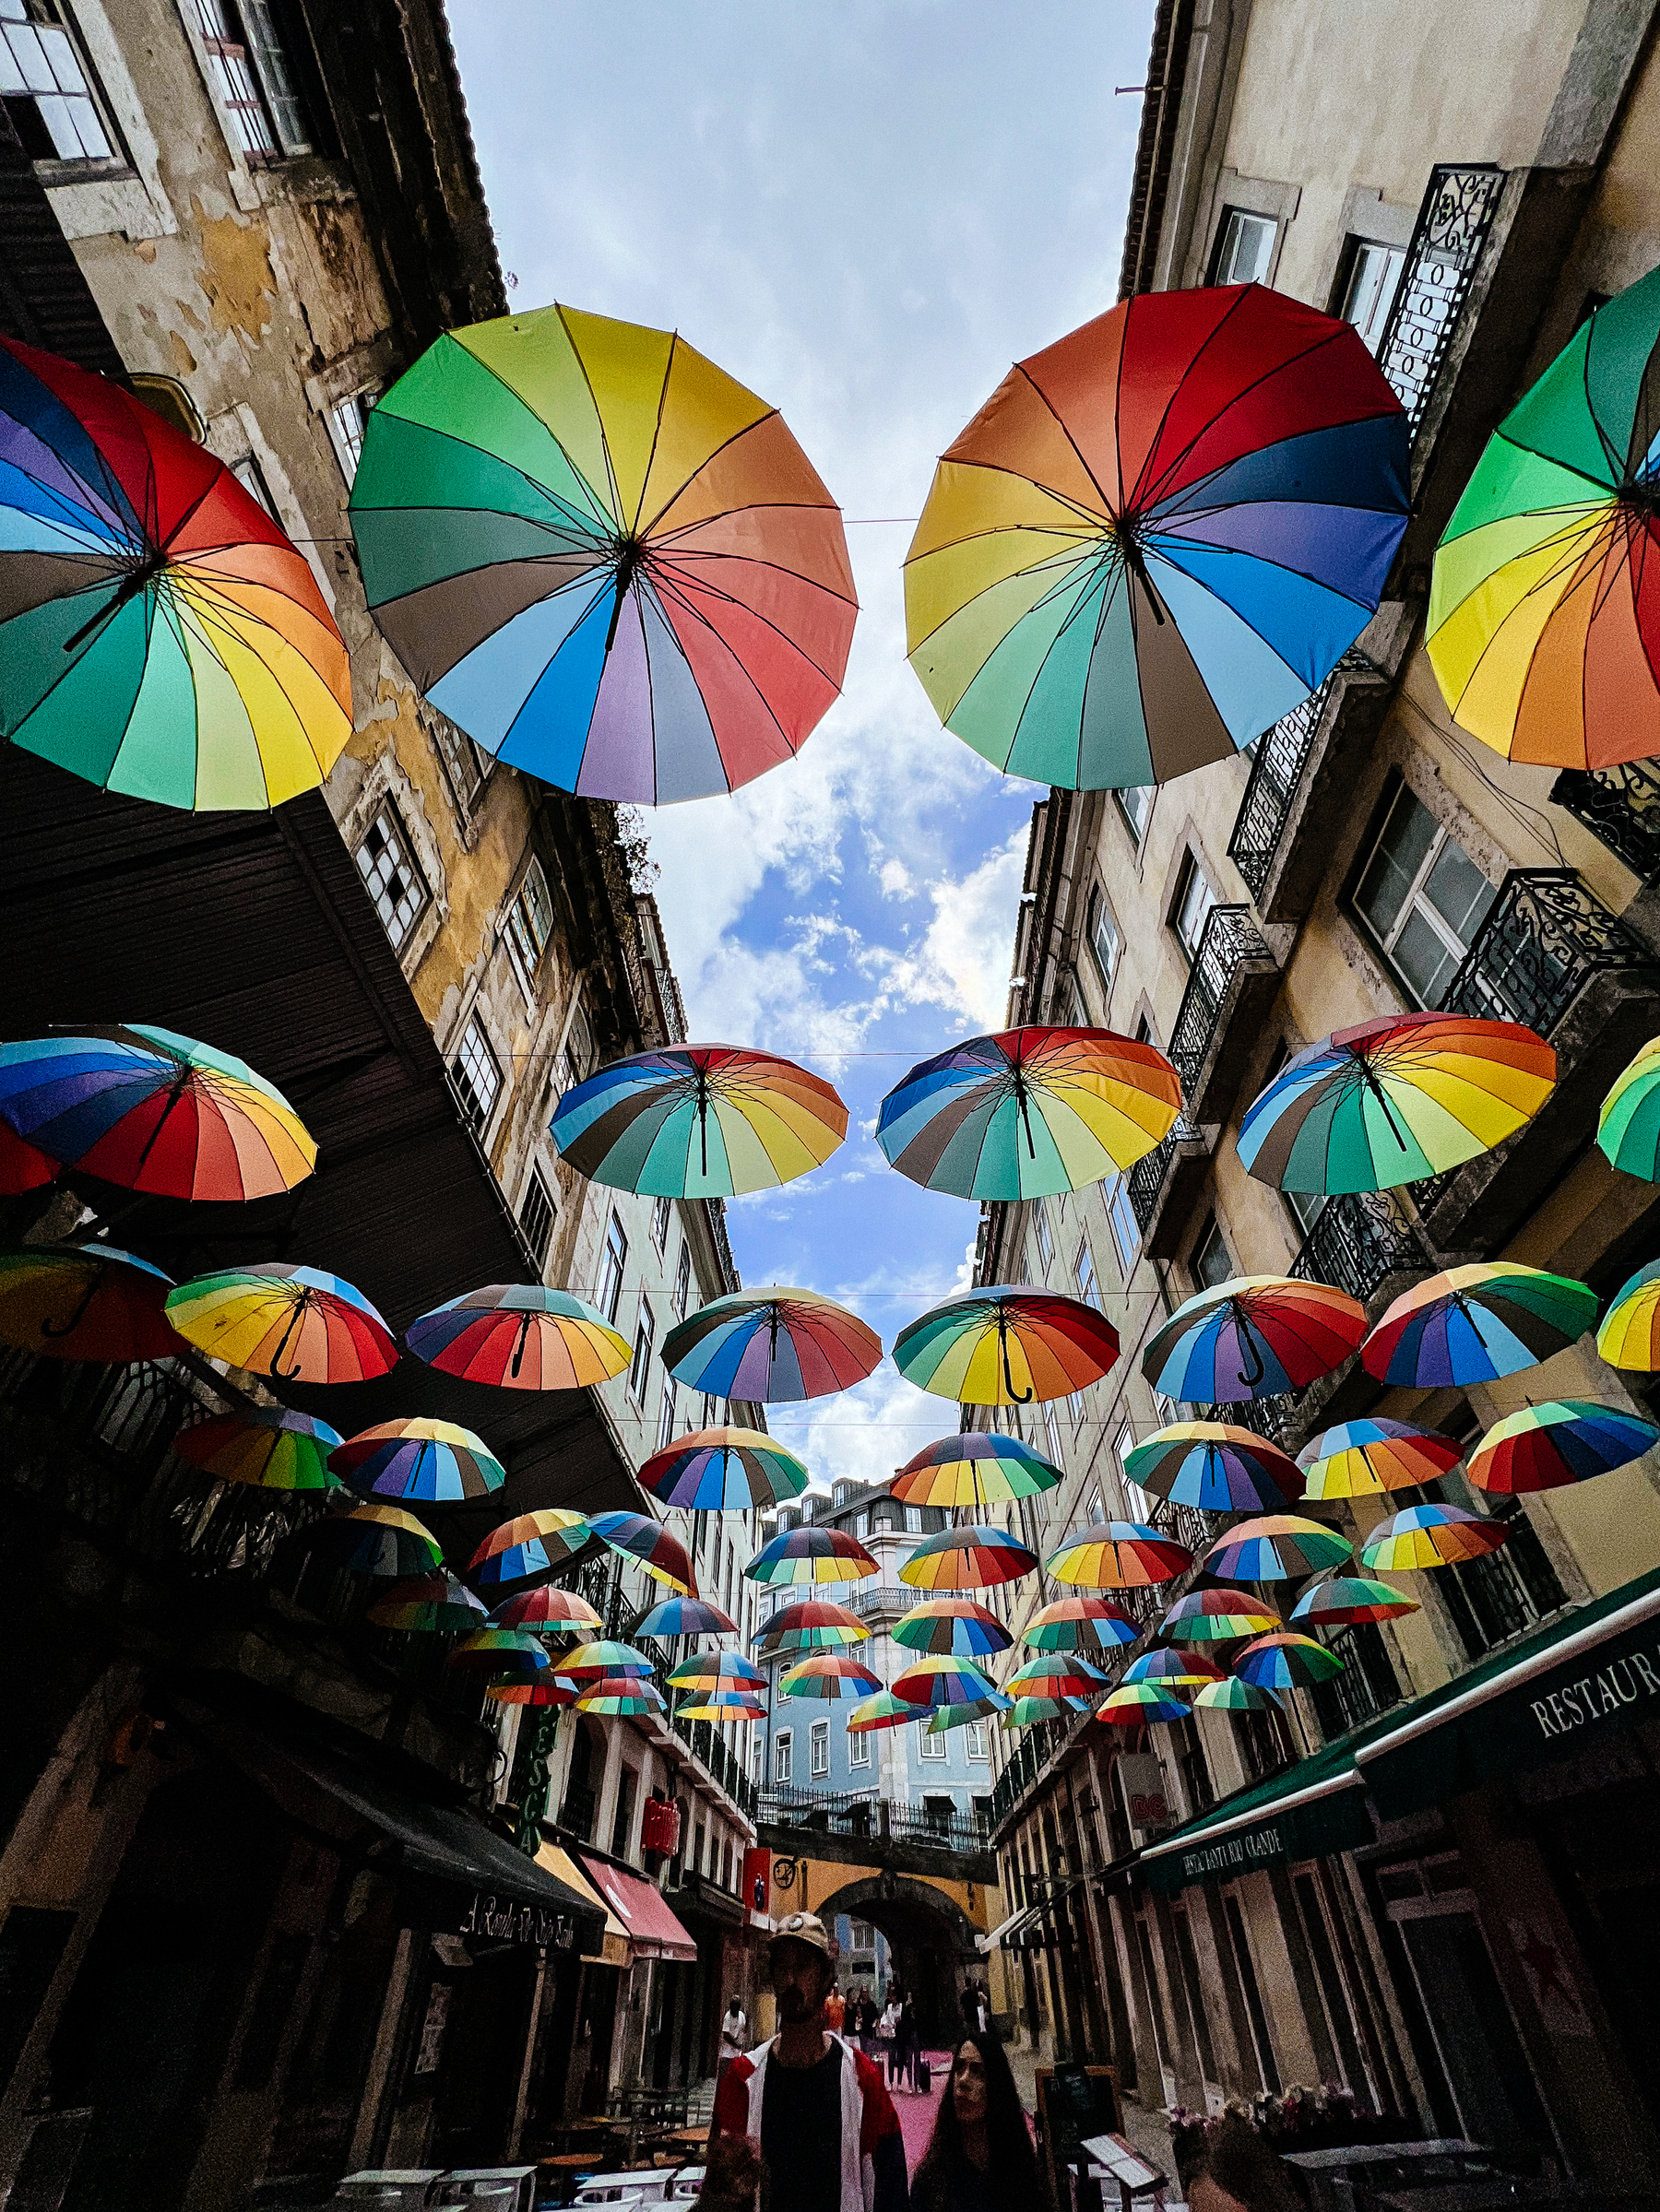 Rainbow coloured umbrellas on a street.